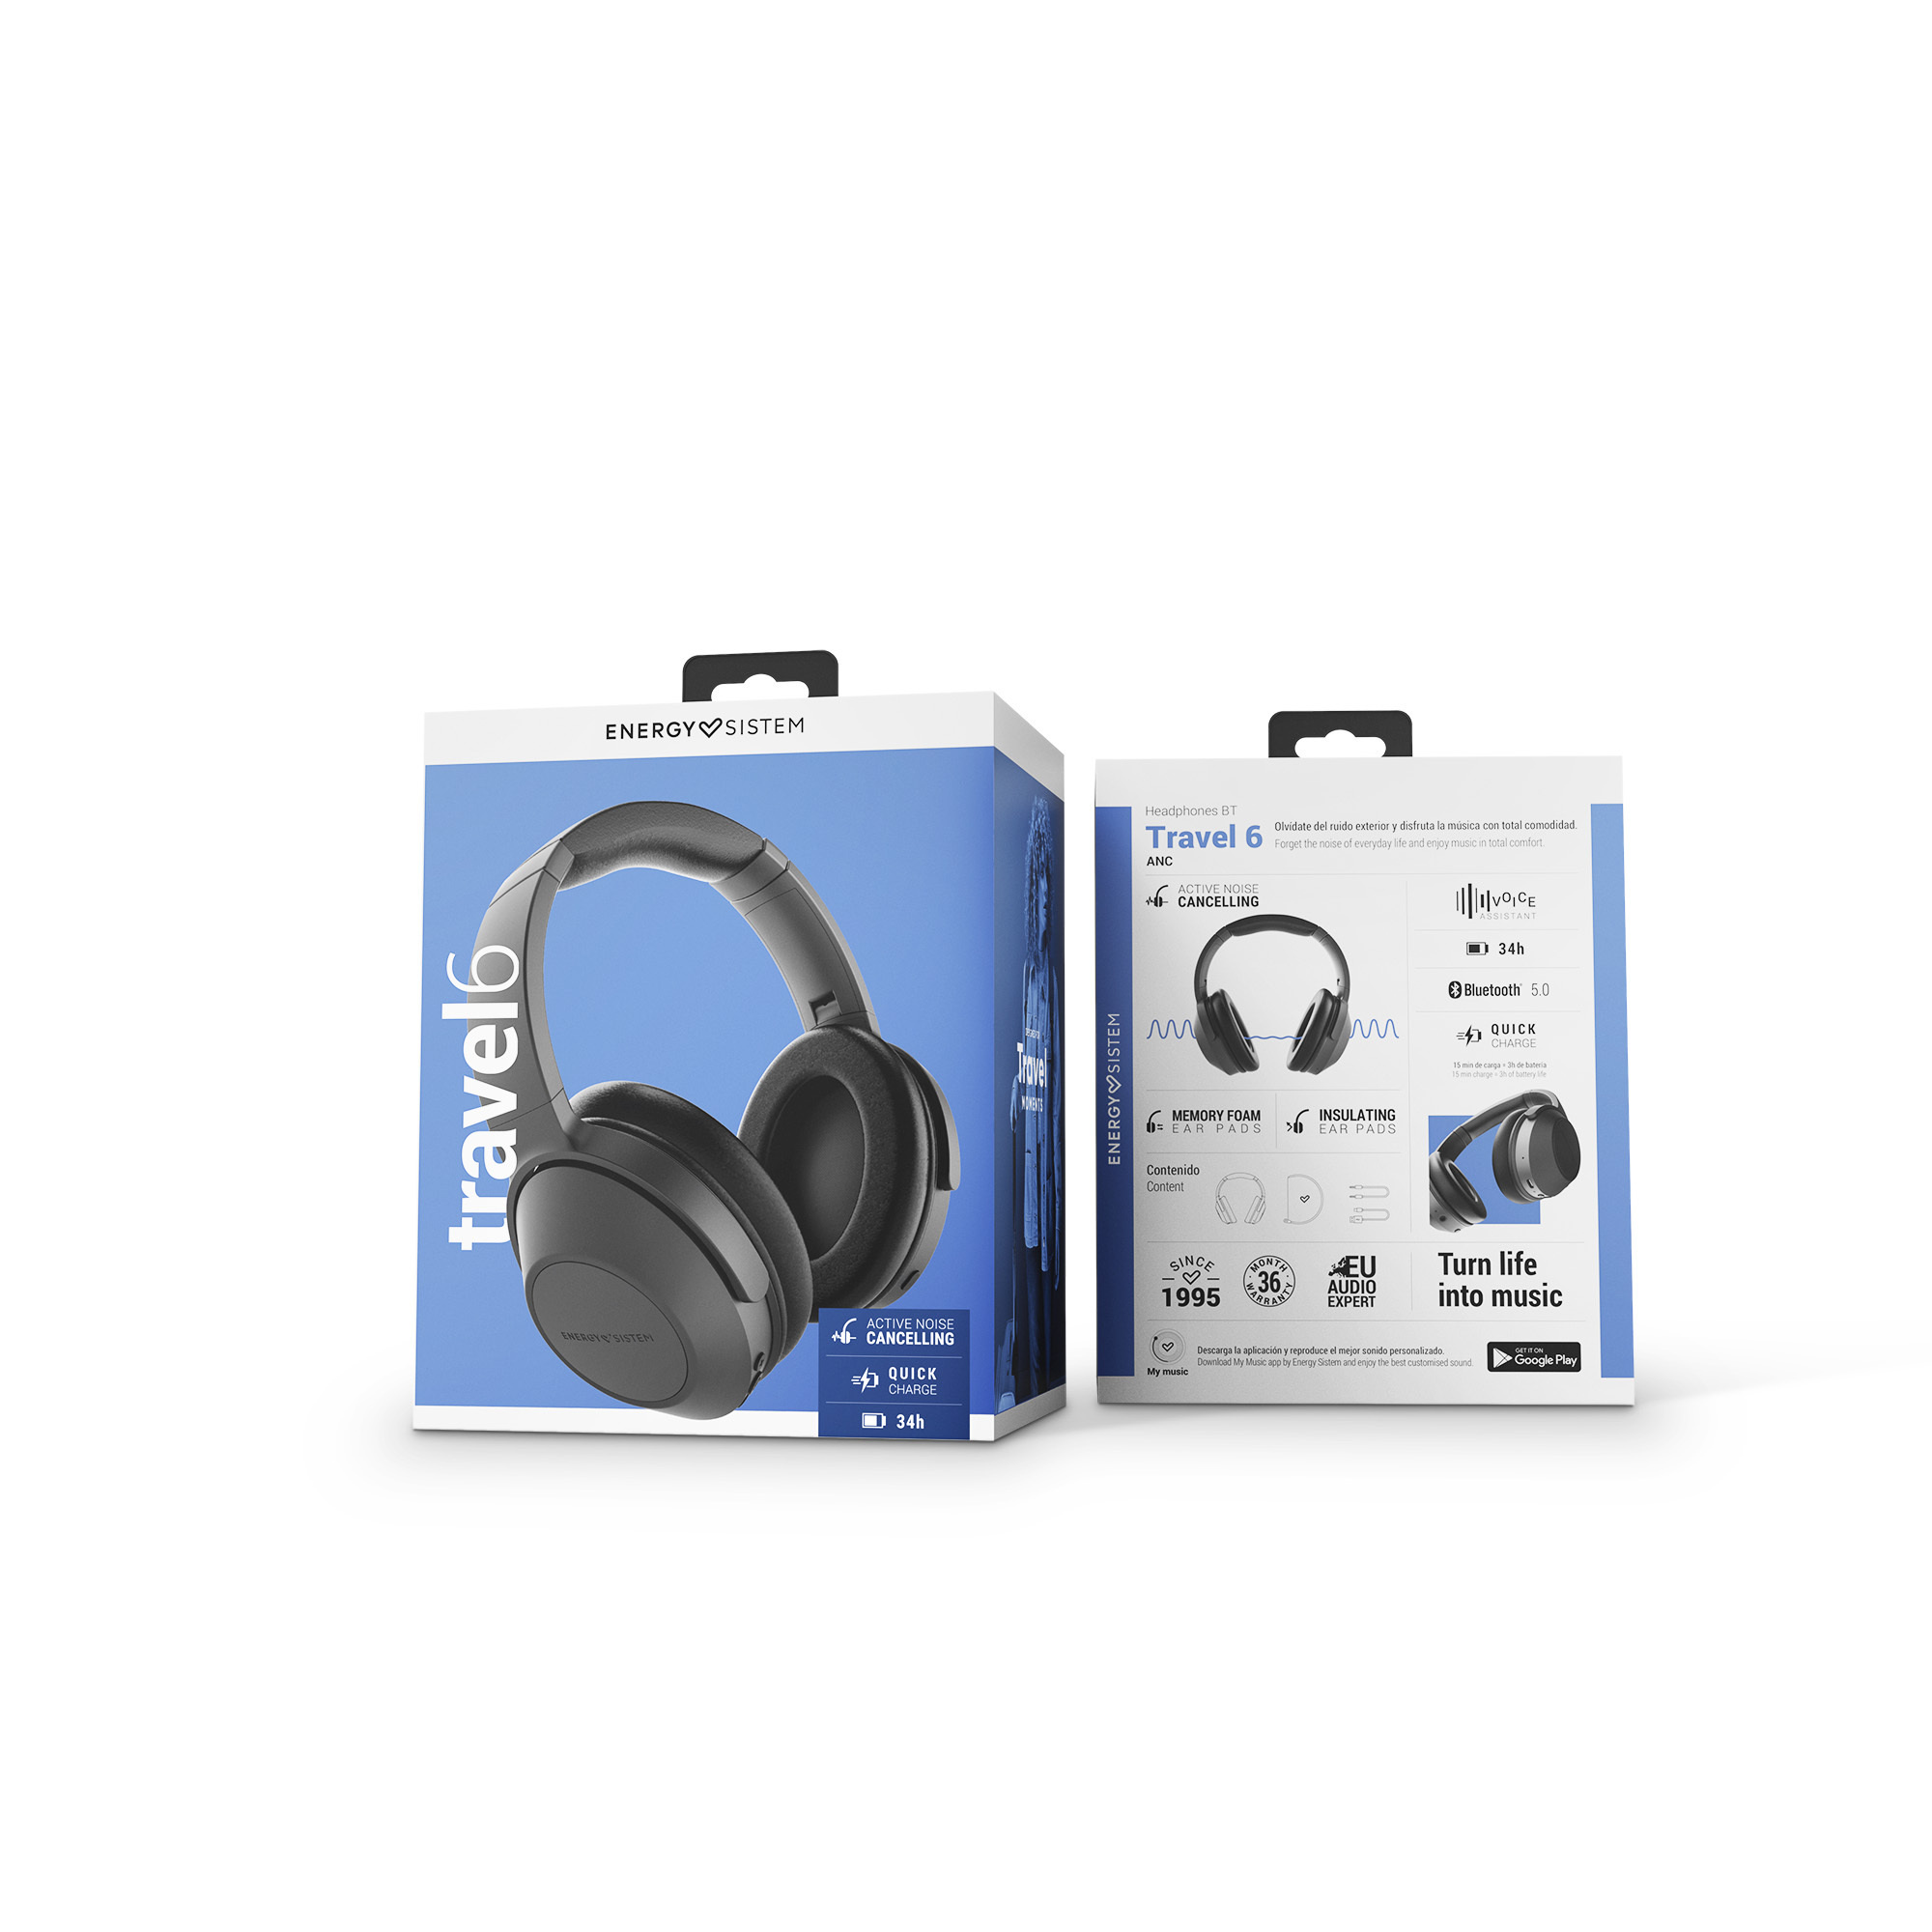 Travel 6 ANC Bluetooth headphones' packaging